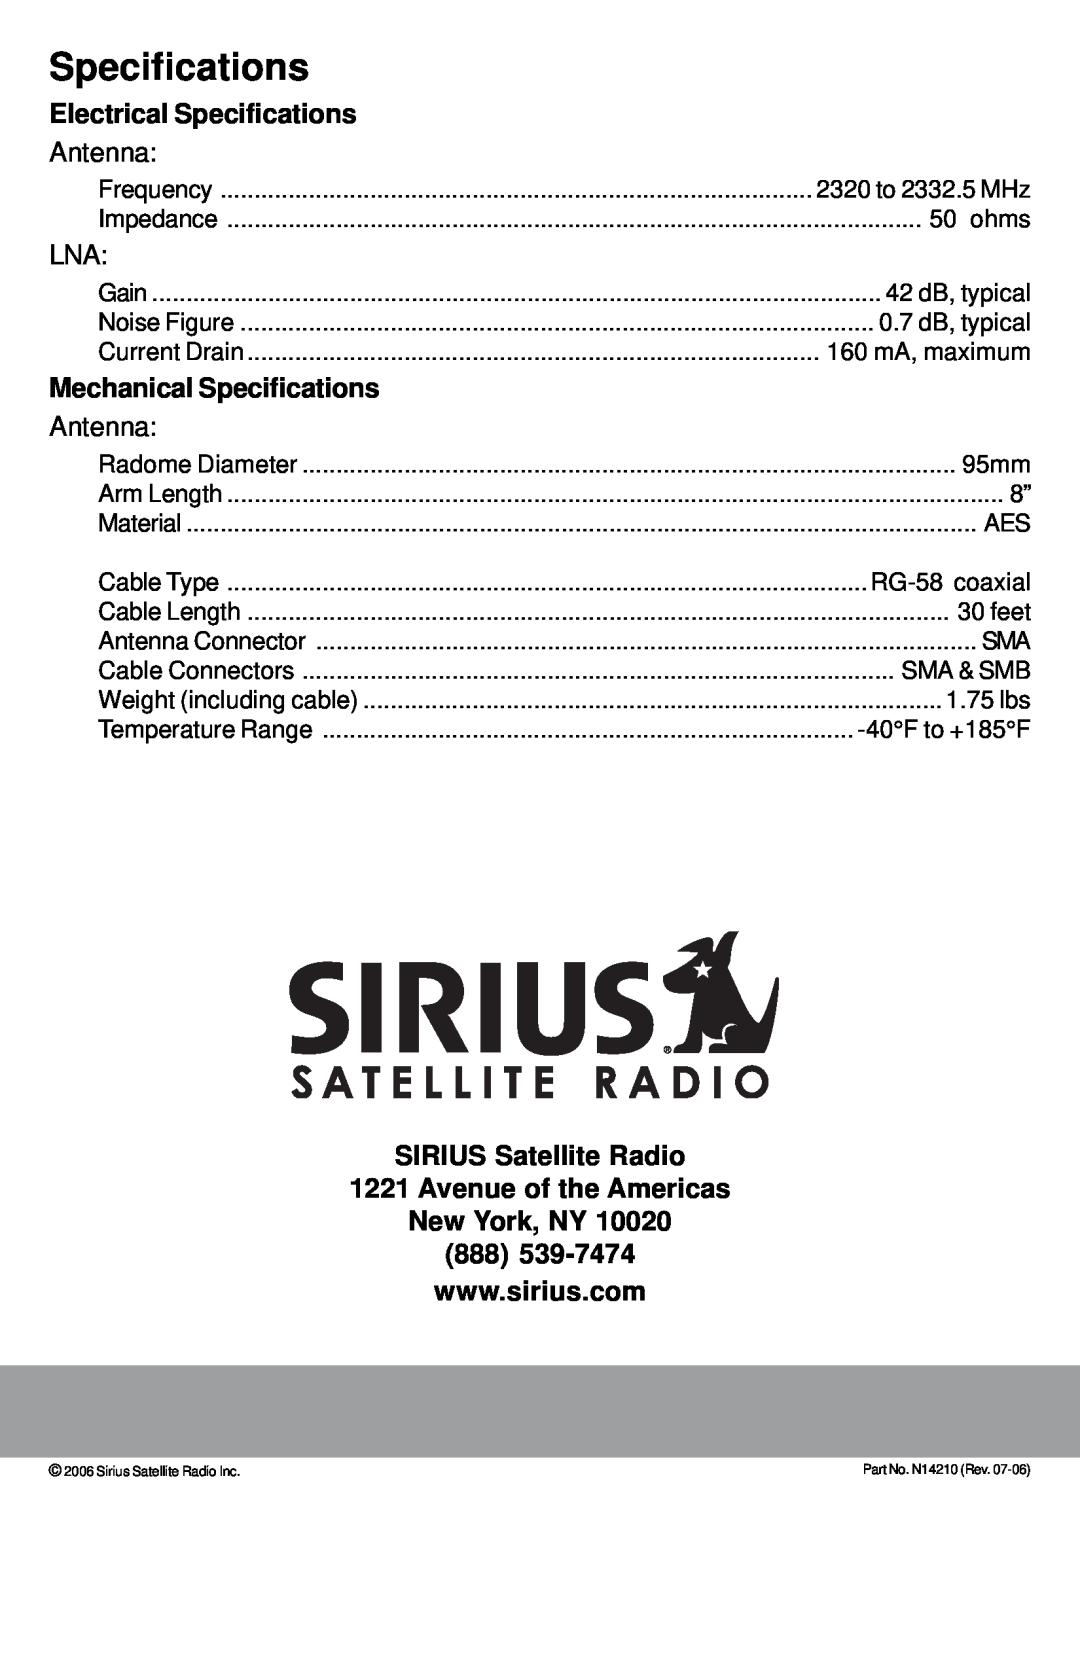 Sirius Satellite Radio SHA1, 128-8662 Electrical Specifications, Mechanical Specifications, SIRIUS Satellite Radio 